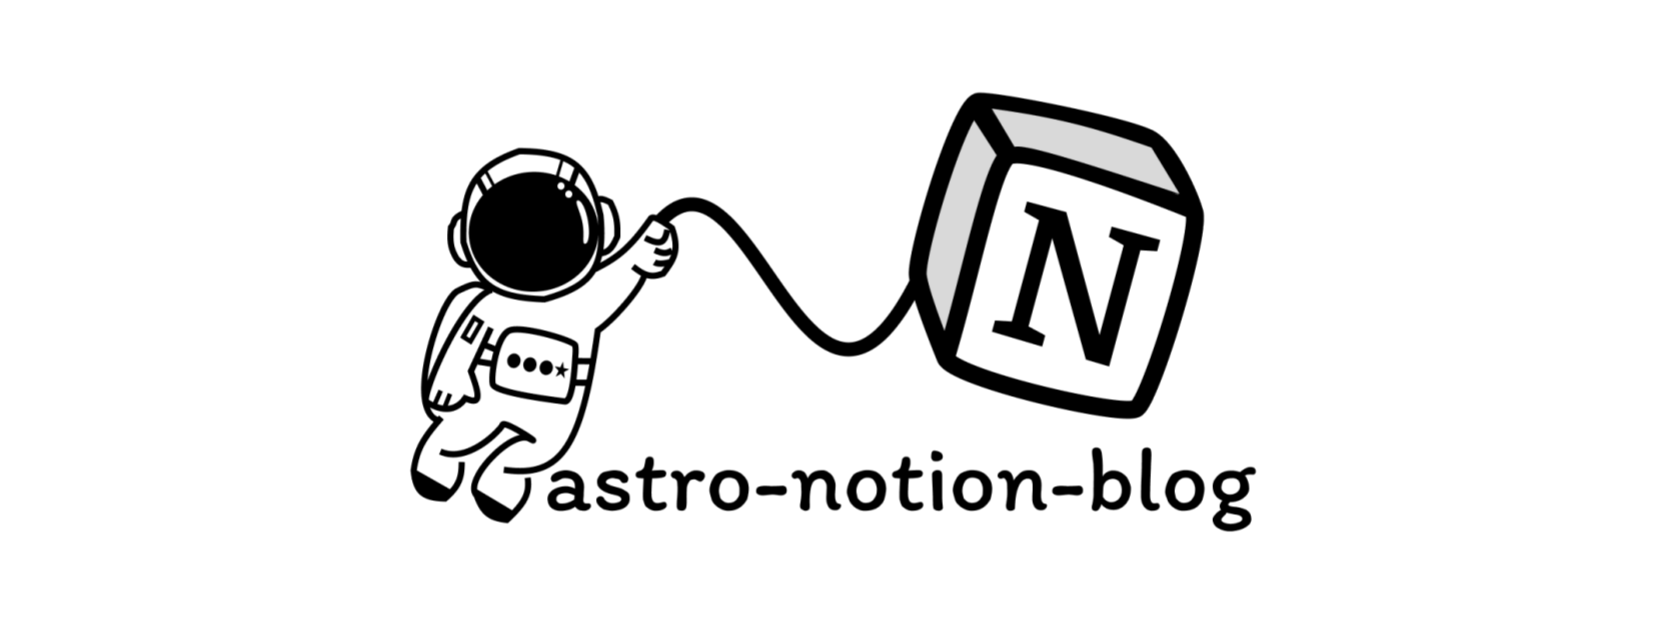 astro-notion-blog